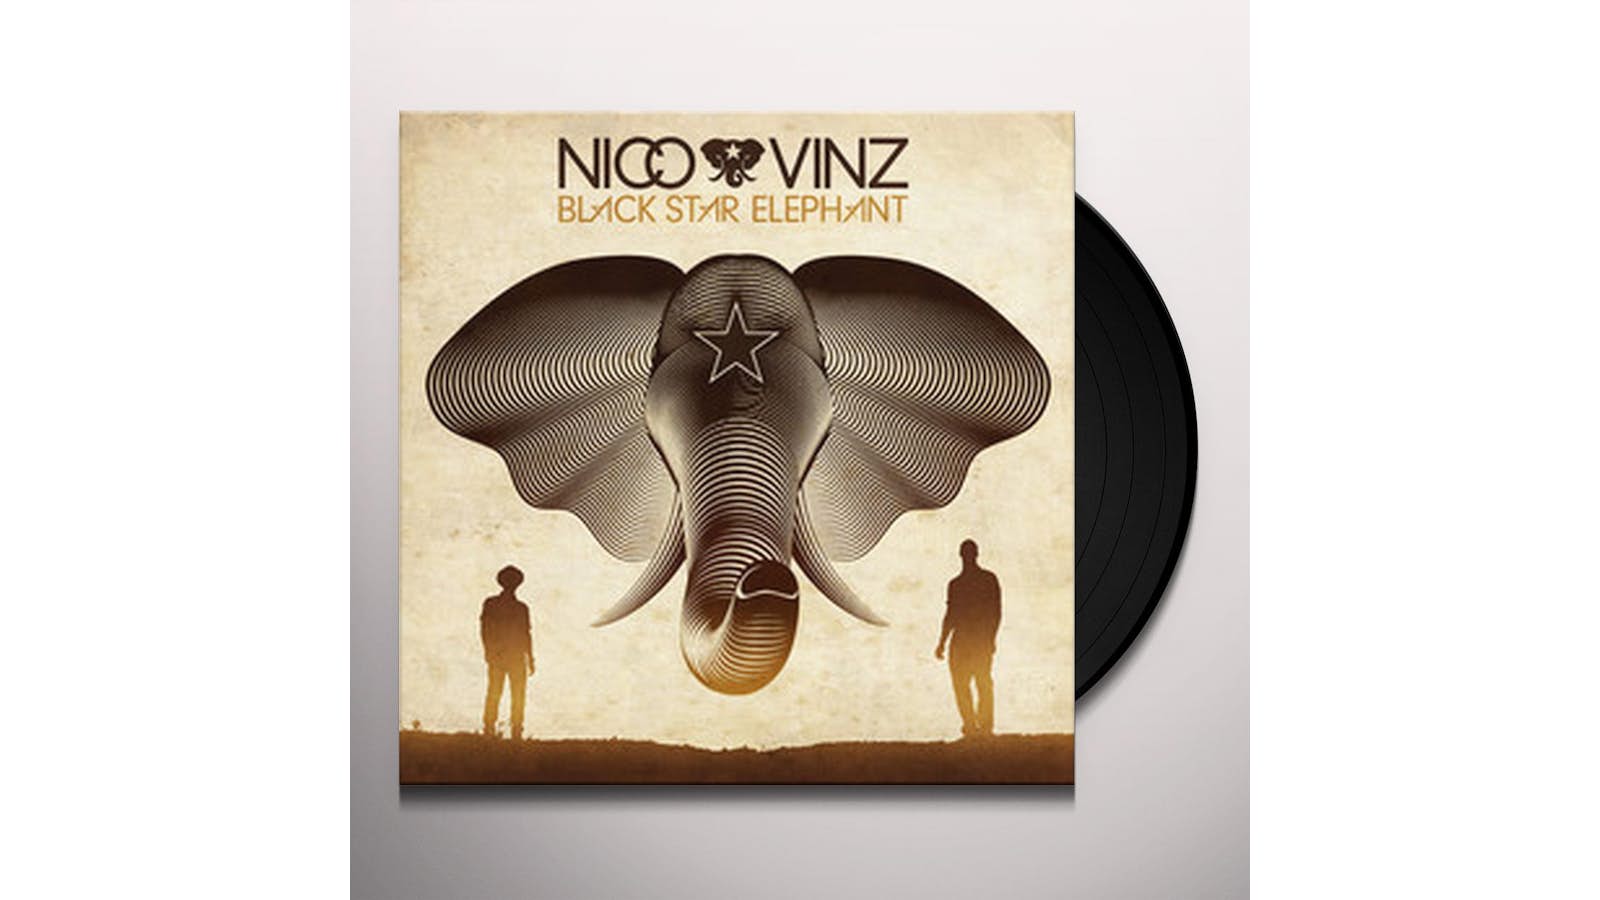 Nico & Vinz BLACK STAR ELEPHANT (CAN) (Vinyl)